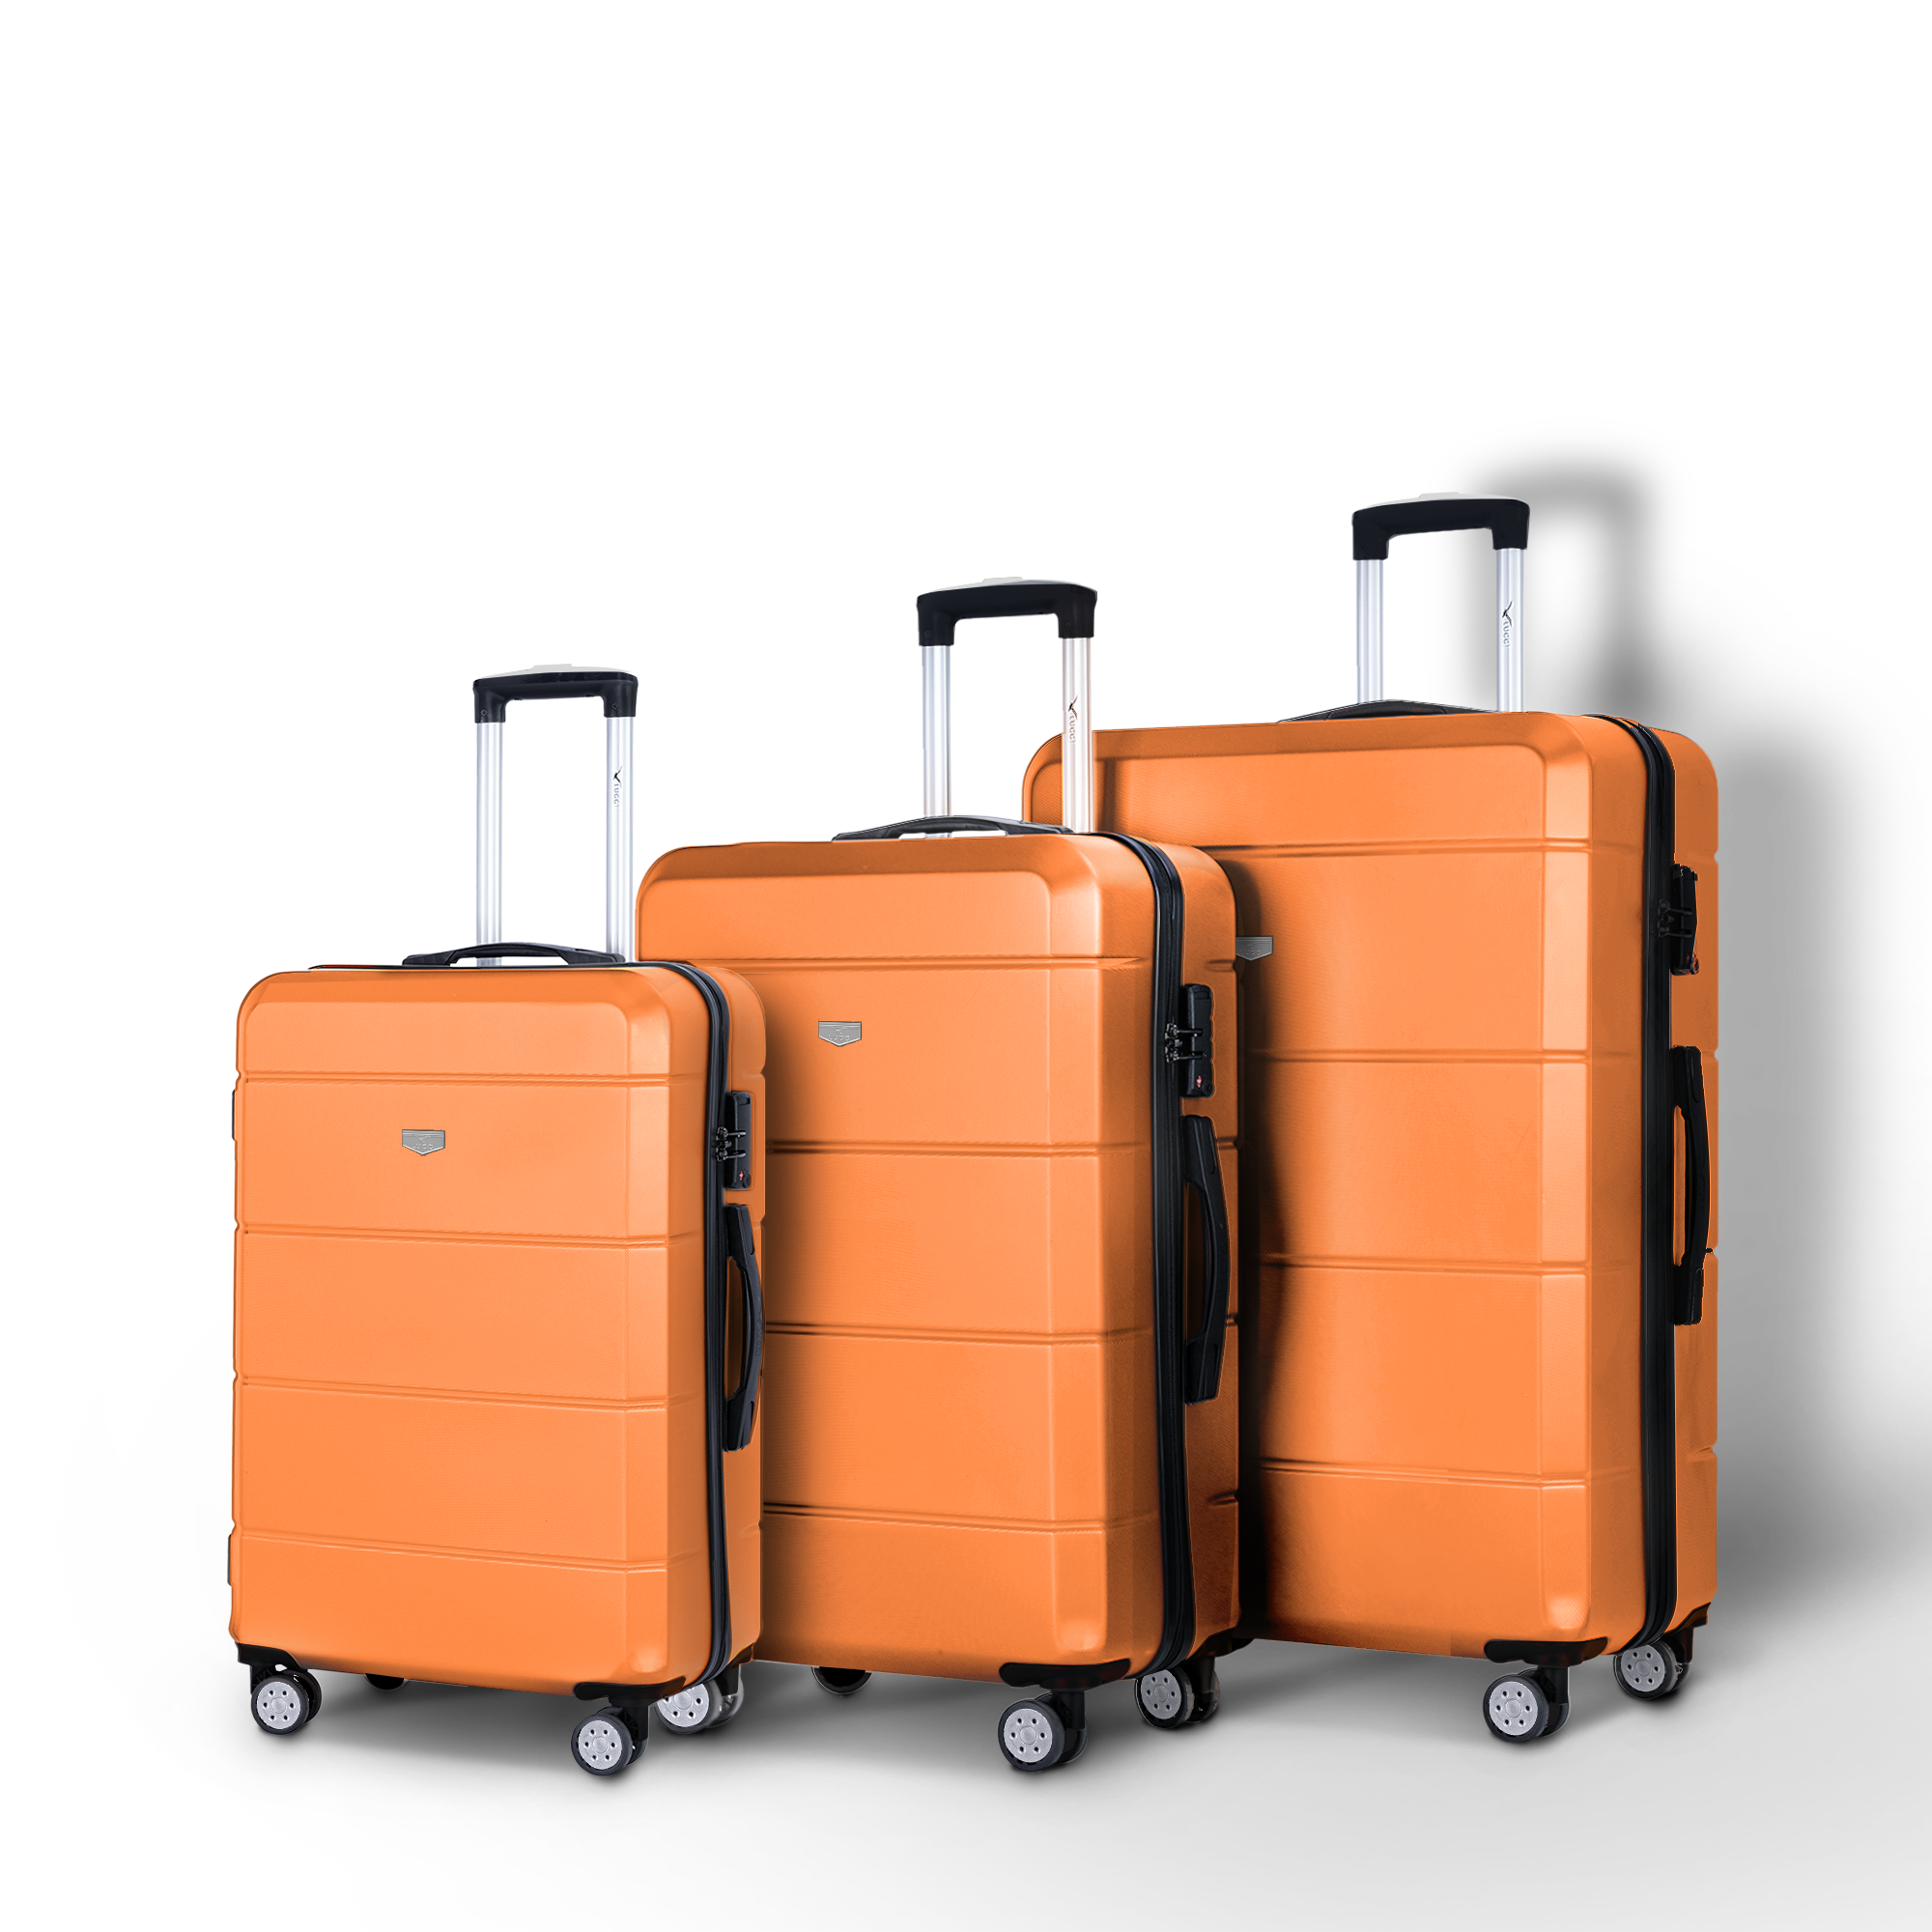 Jetset 3pc Suitcase Set in Orange